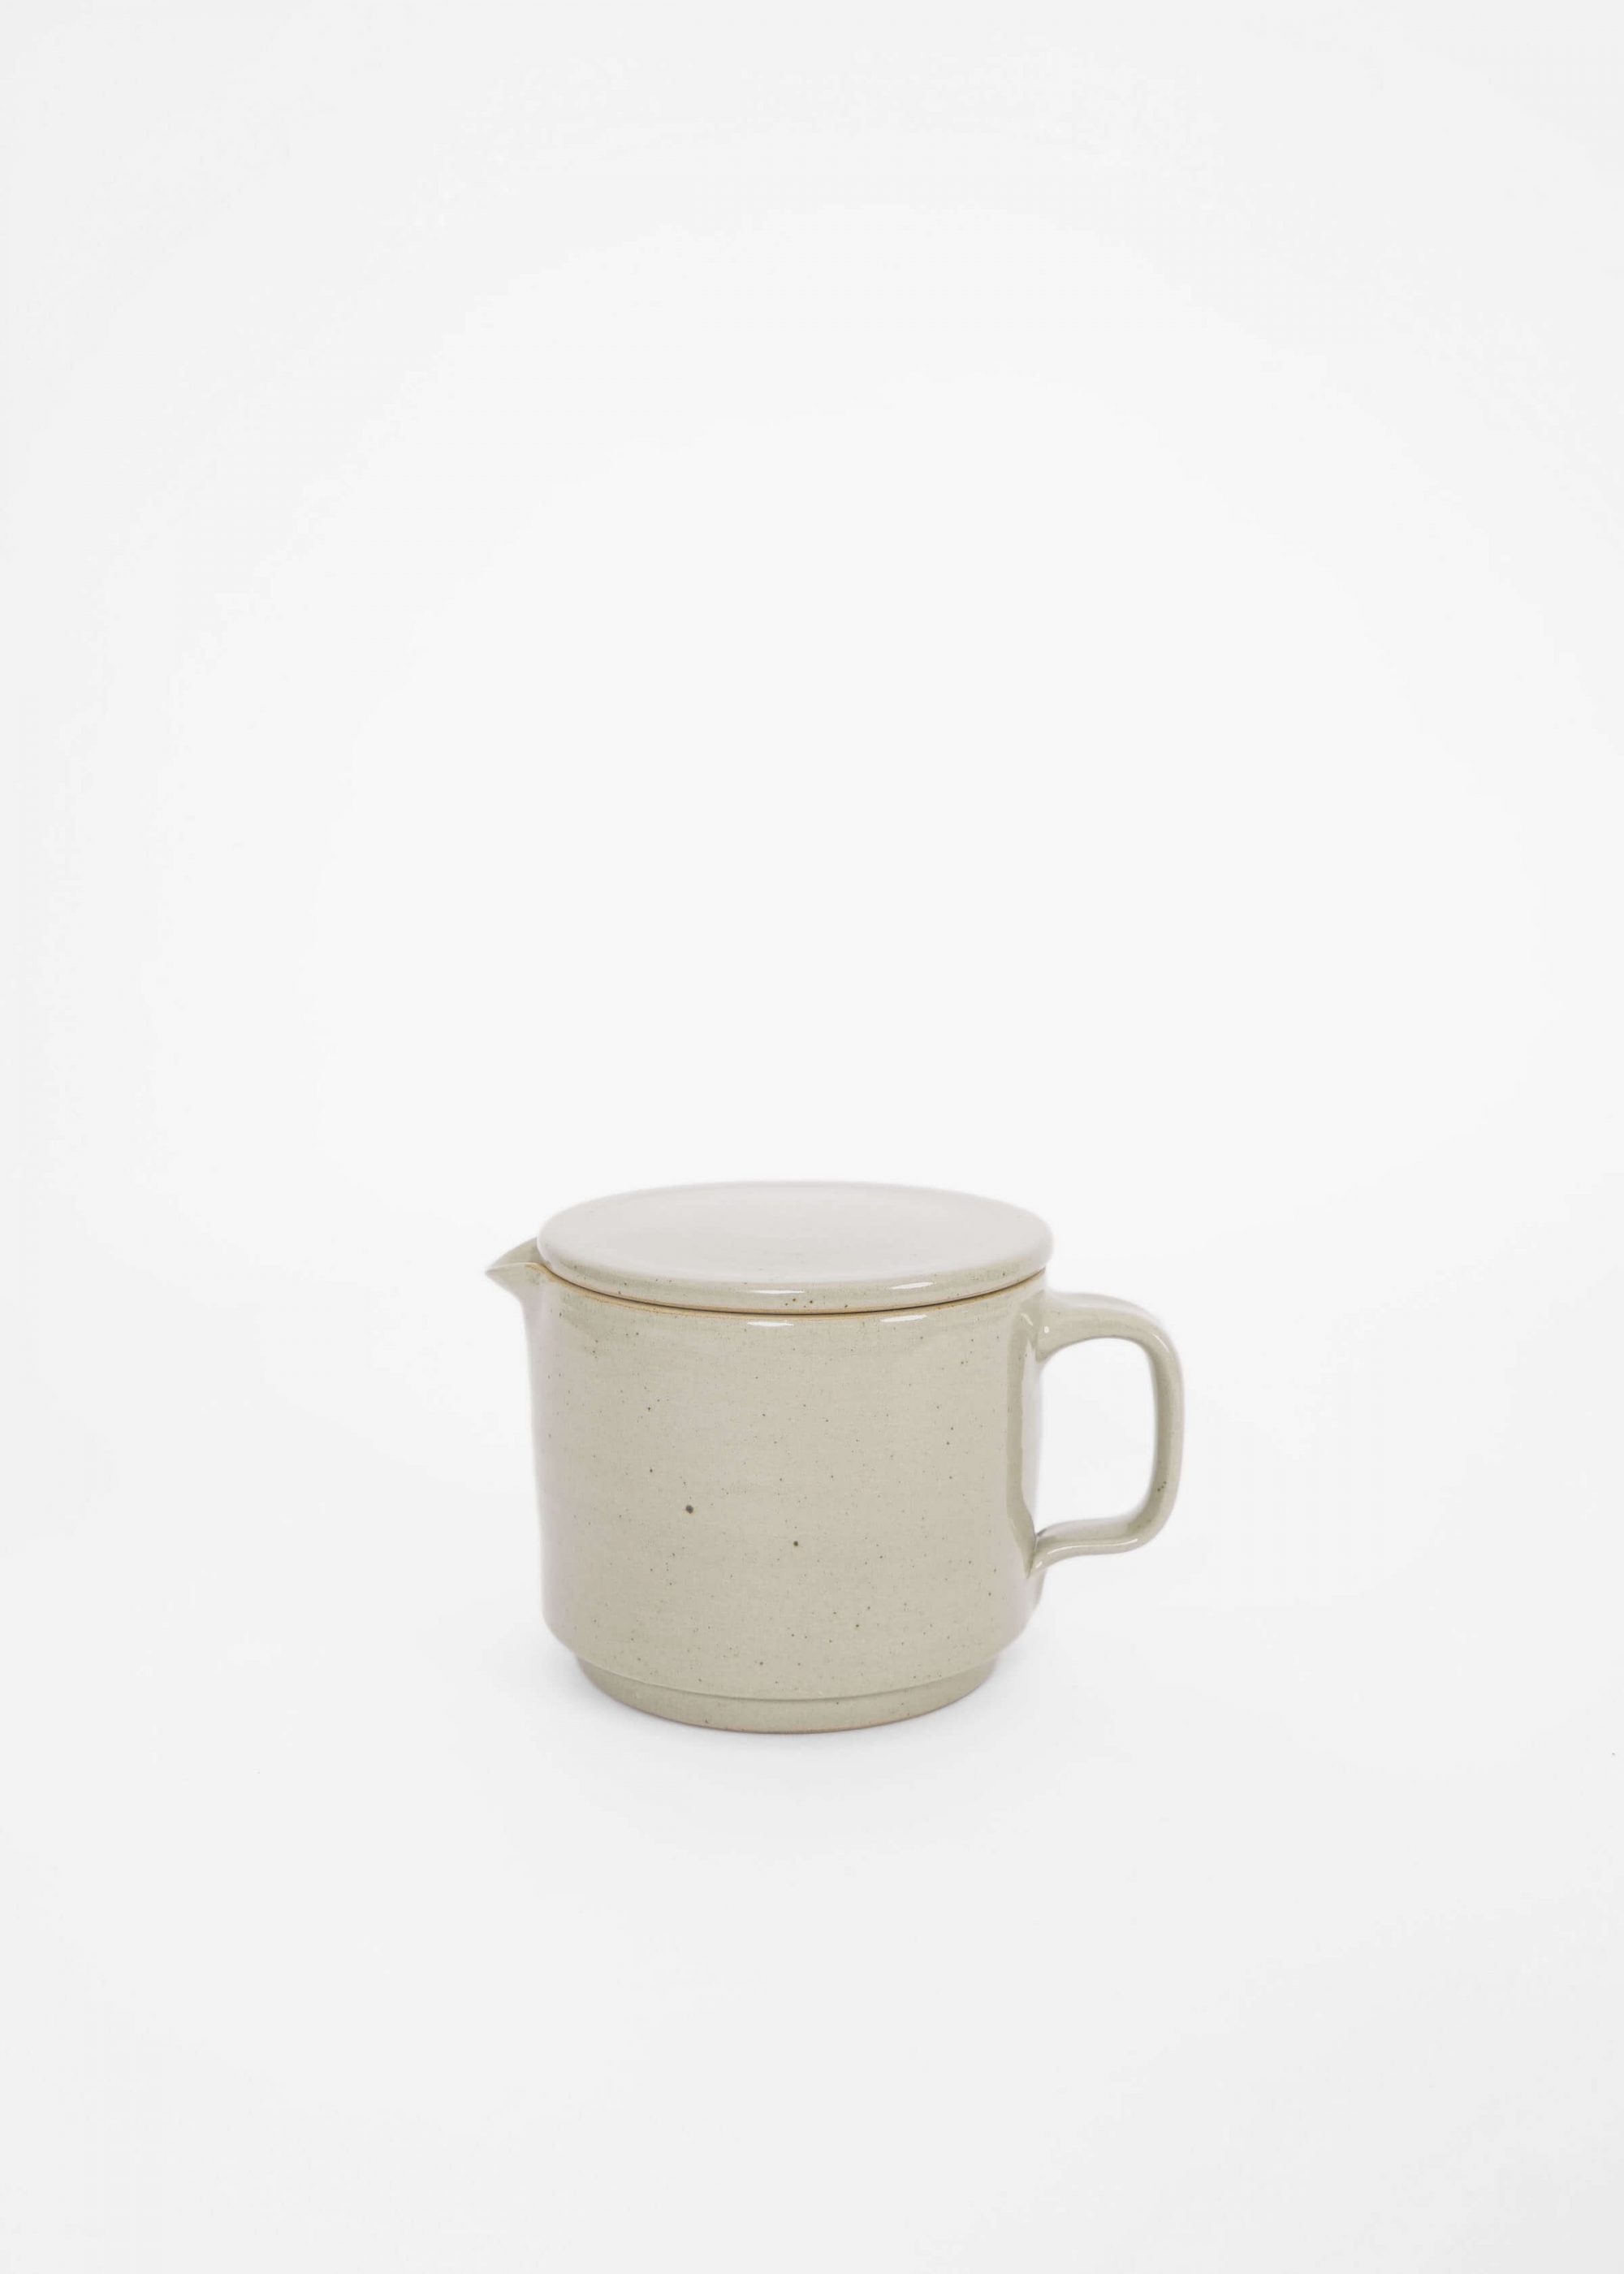 Product image for »Brutal« Grey Teapot 1.5 litre | Genuine Stoneware Ceramic